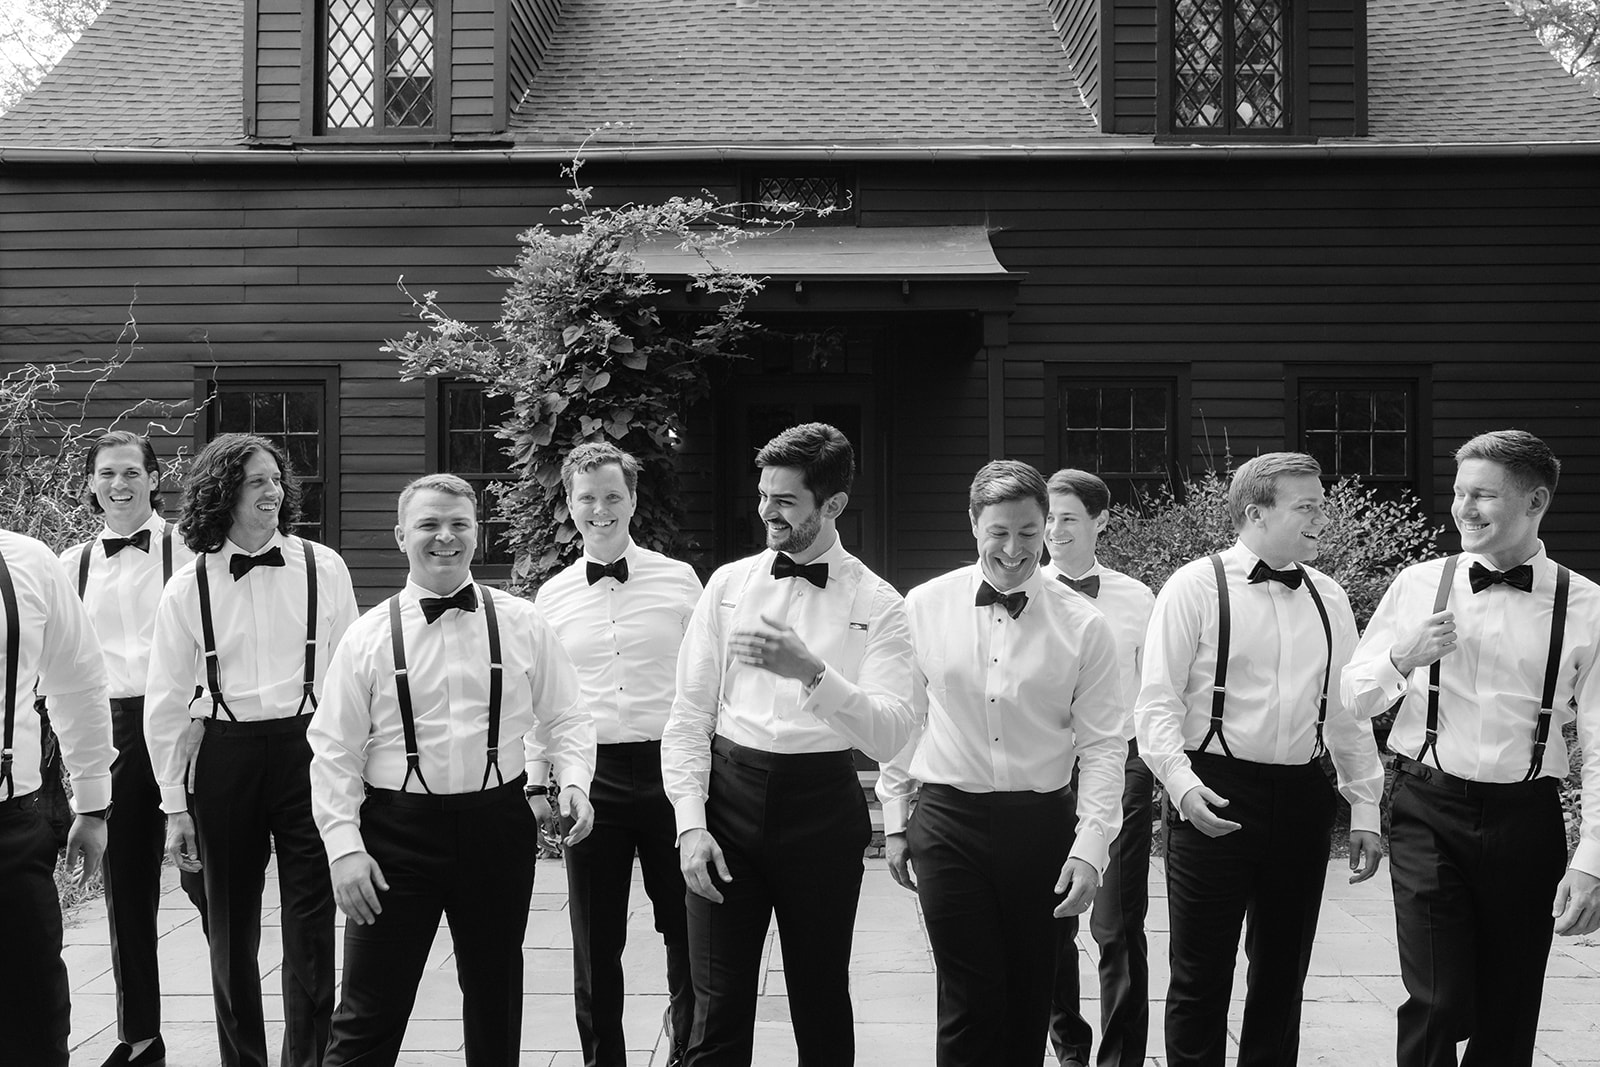 Candid, documentary-style groomsmen group photo.